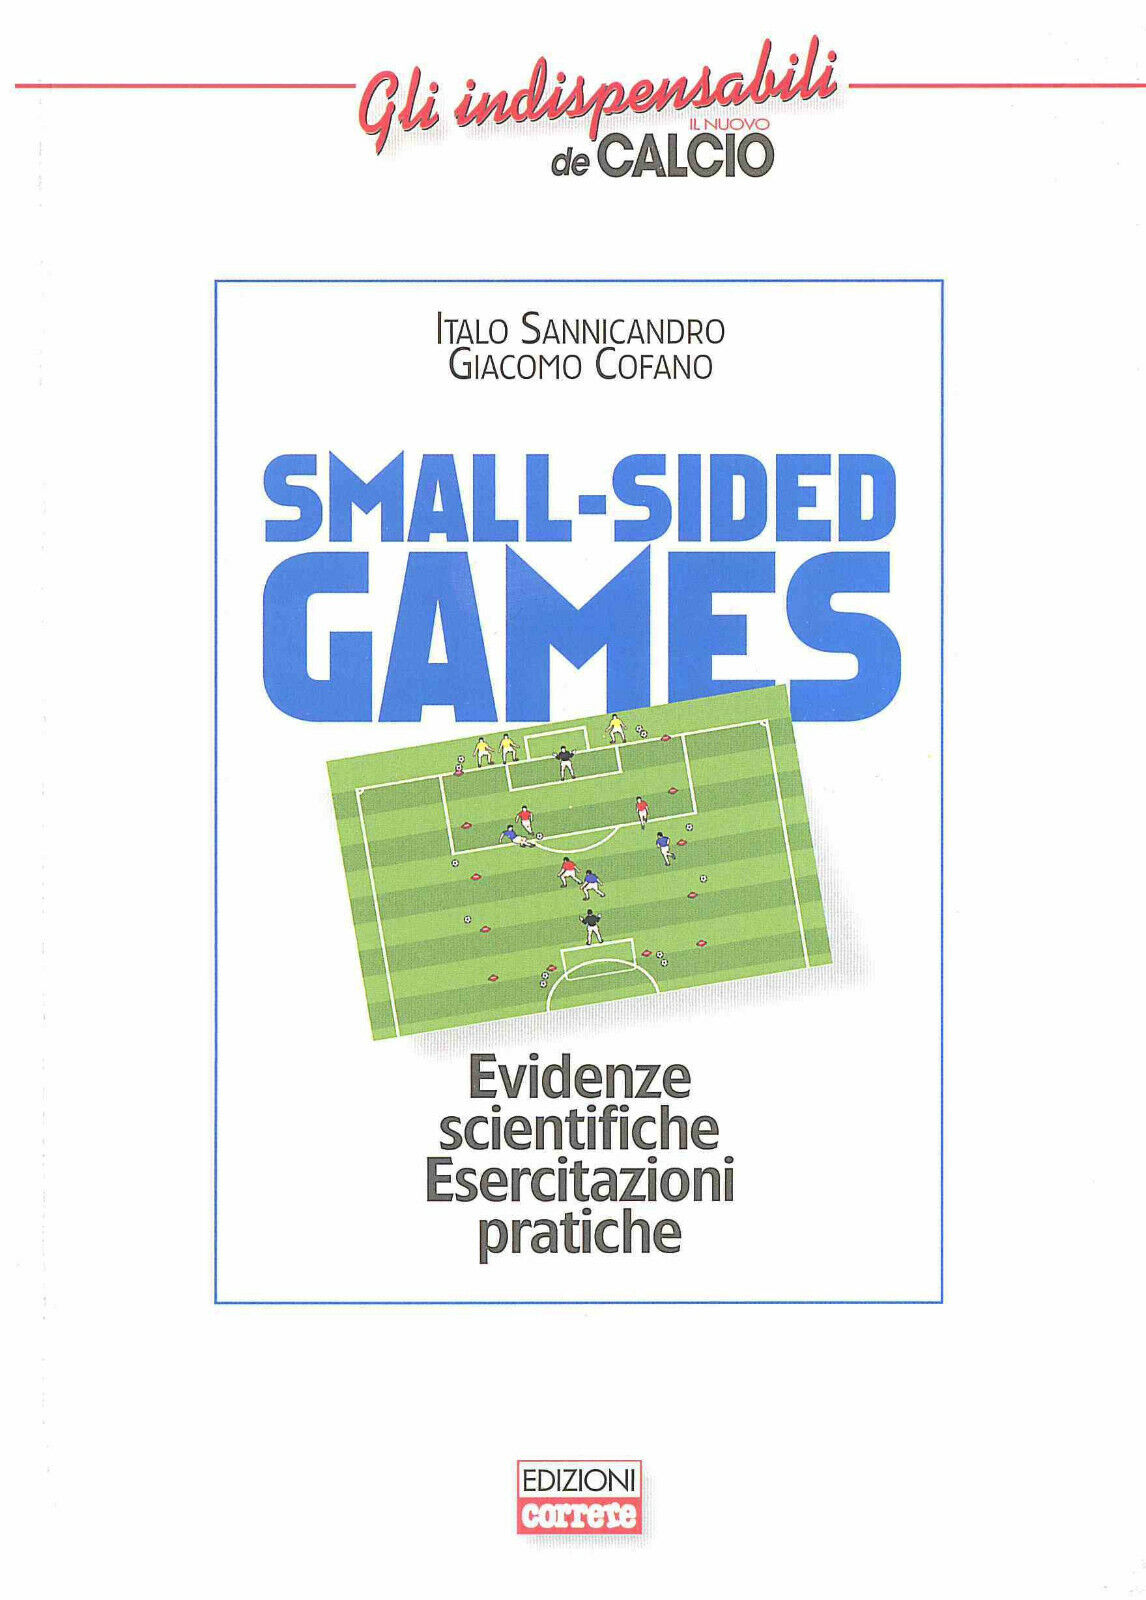 Small-sided games vol.1 - Italo Sannicandro, Giacomo Cofano - Correre, 2015